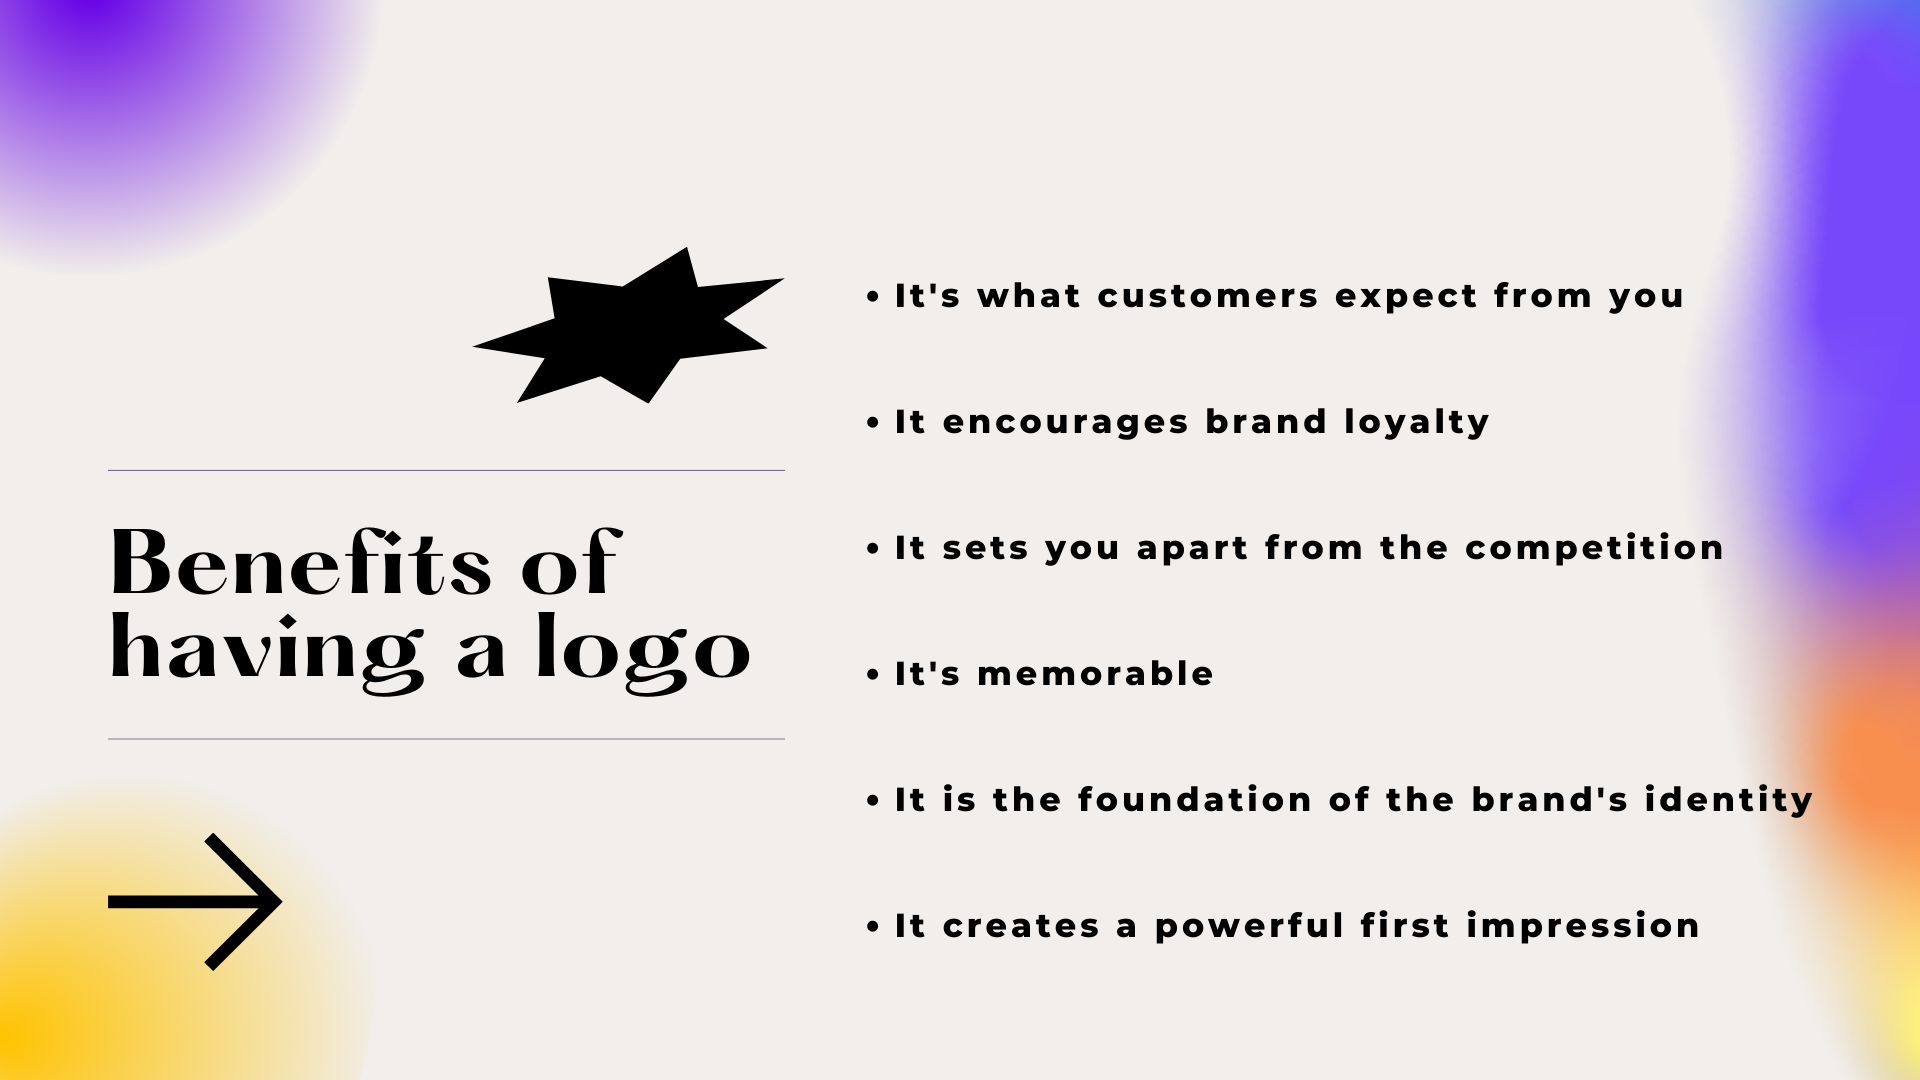 Benefits of having a logo